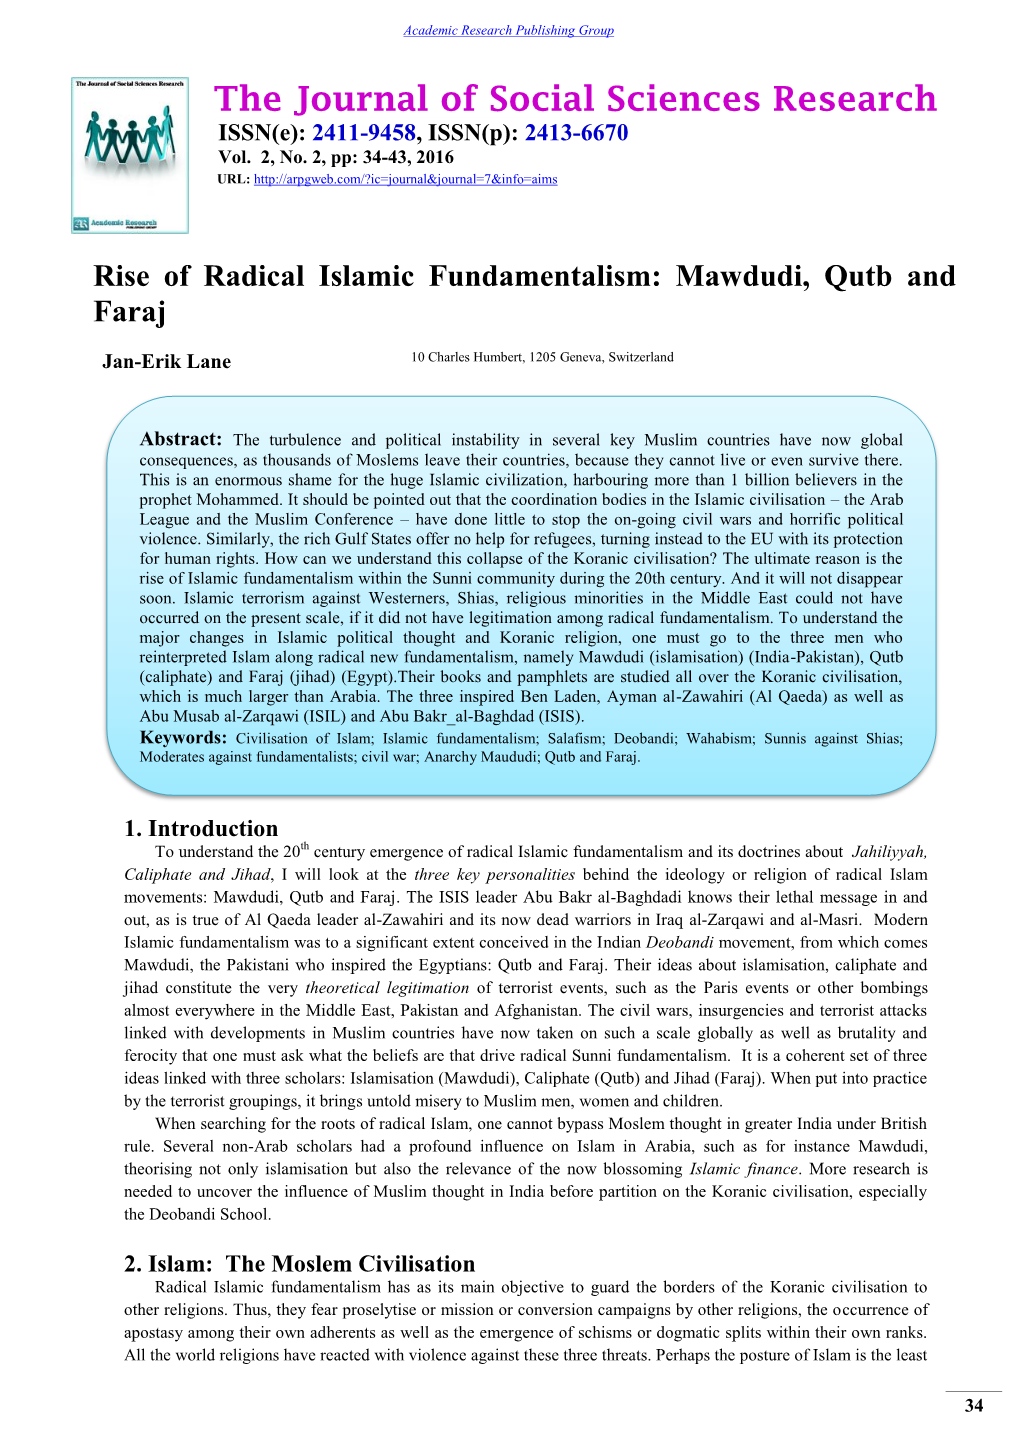 Rise of Radical Islamic Fundamentalism: Mawdudi, Qutb and Faraj